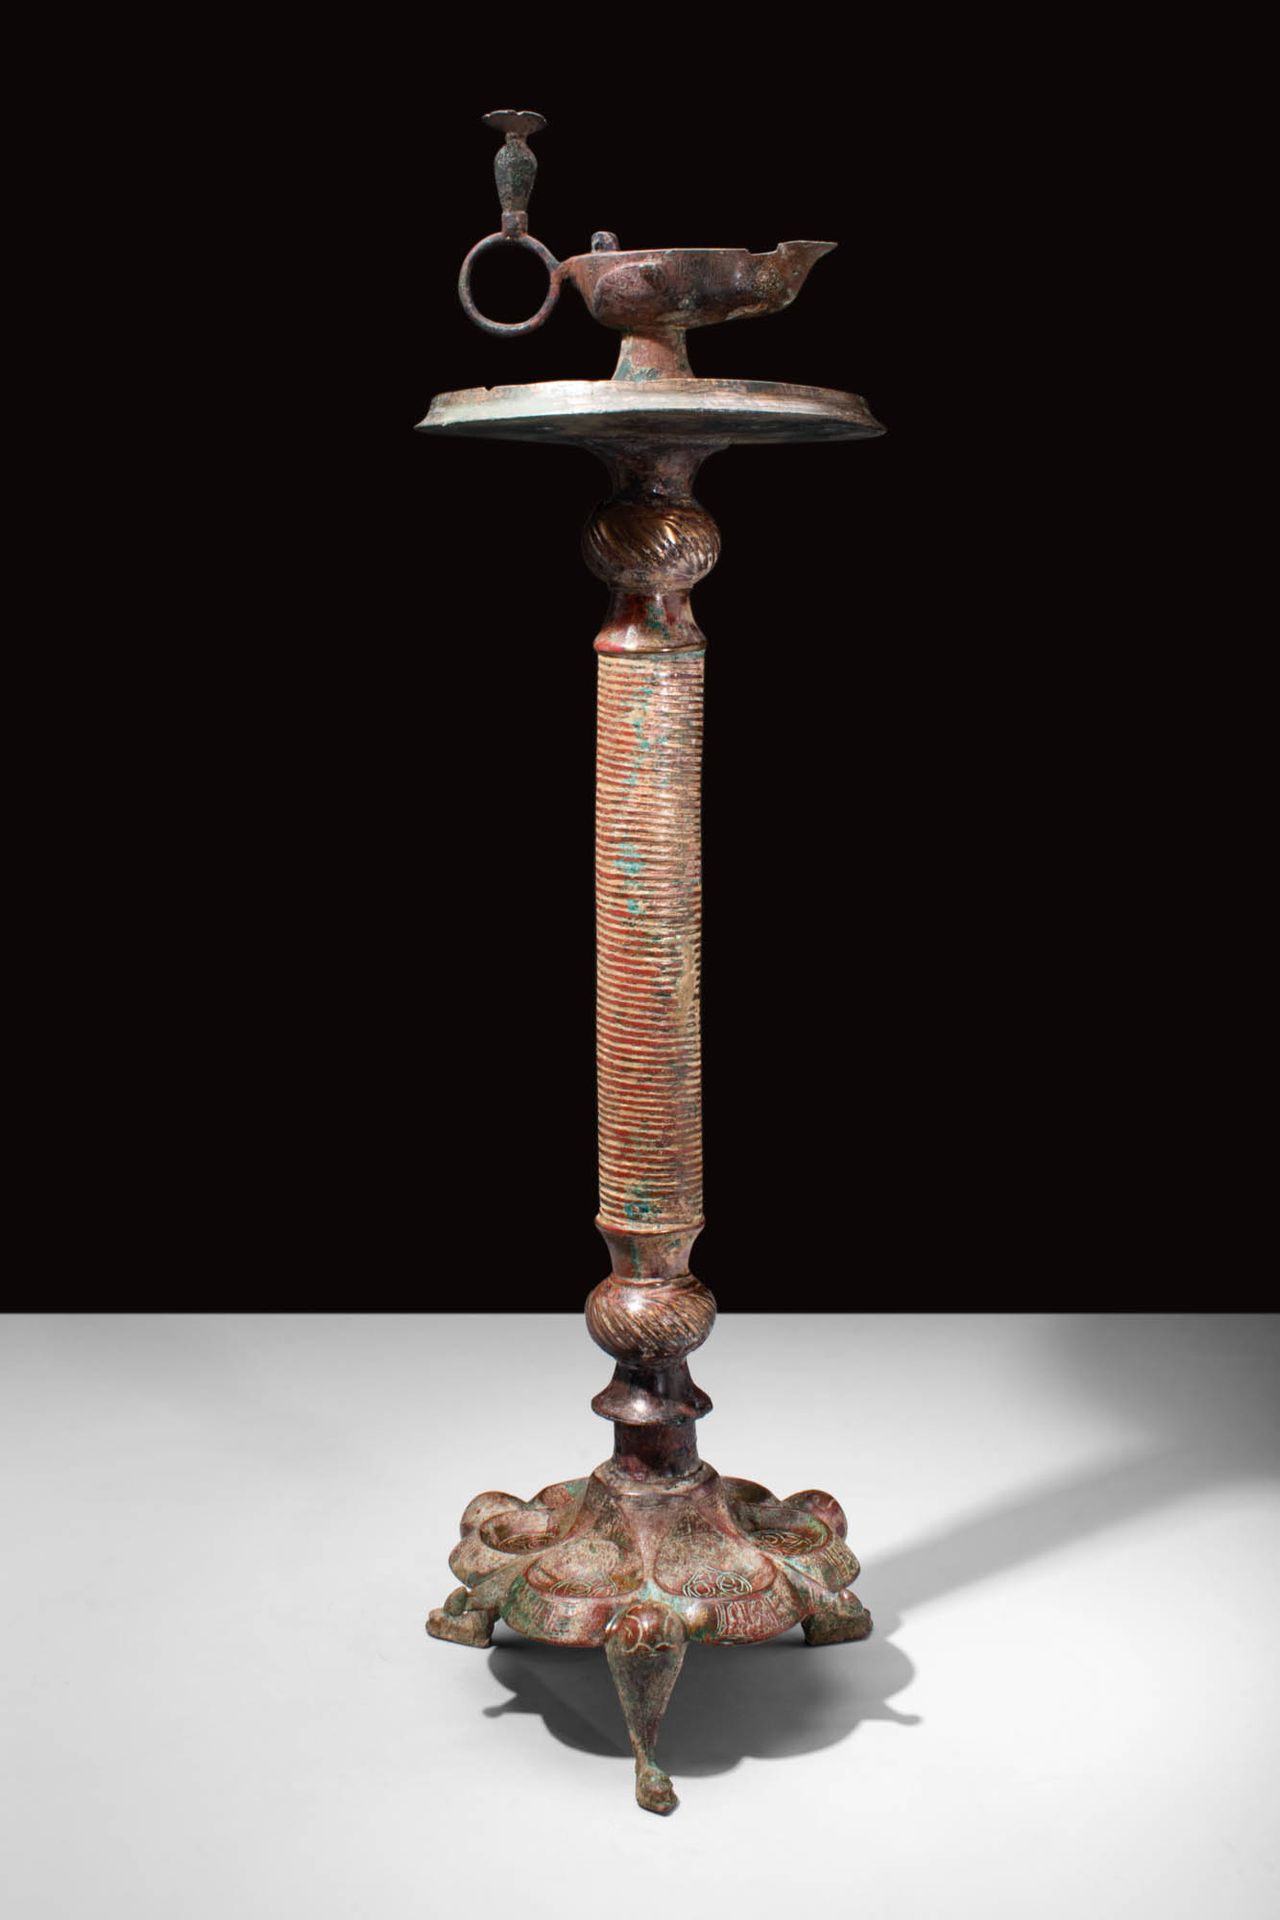 RARE SELJUK BRONZE LAMPSTAND Ca. AD 900 - 1200.
An Islamic Seljuk bronze lampsta&hellip;